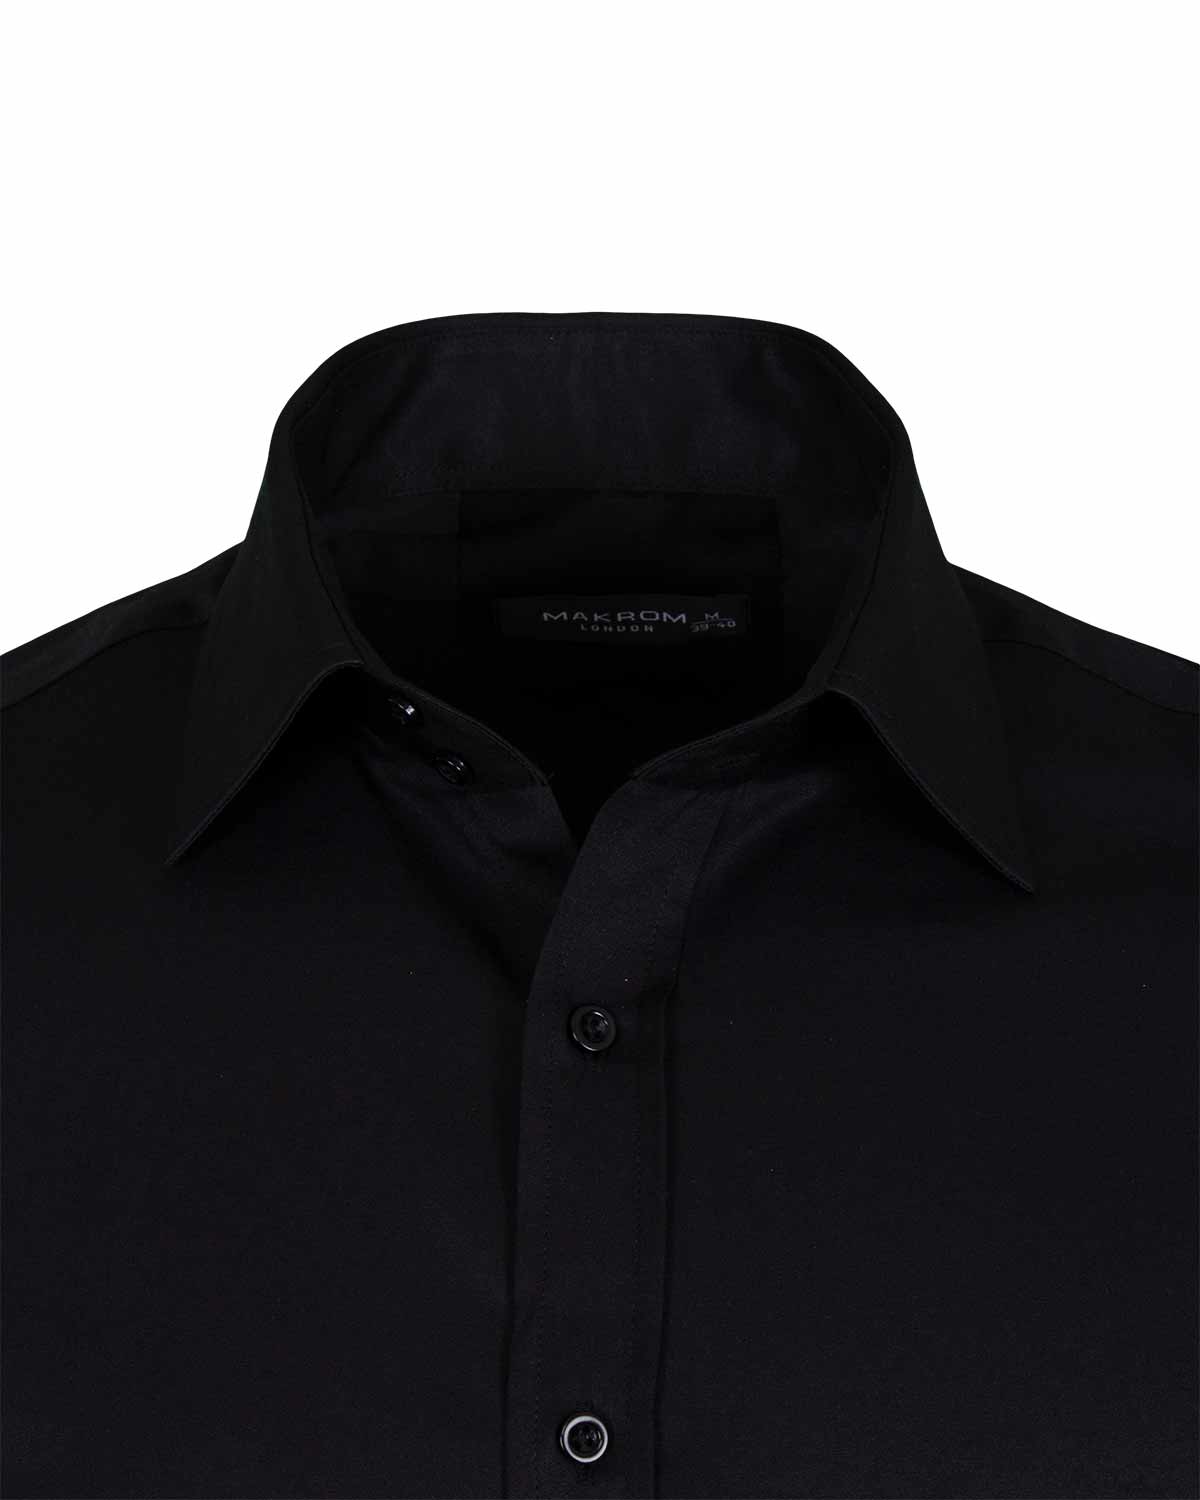 Black Plain Double Cuff Shirt